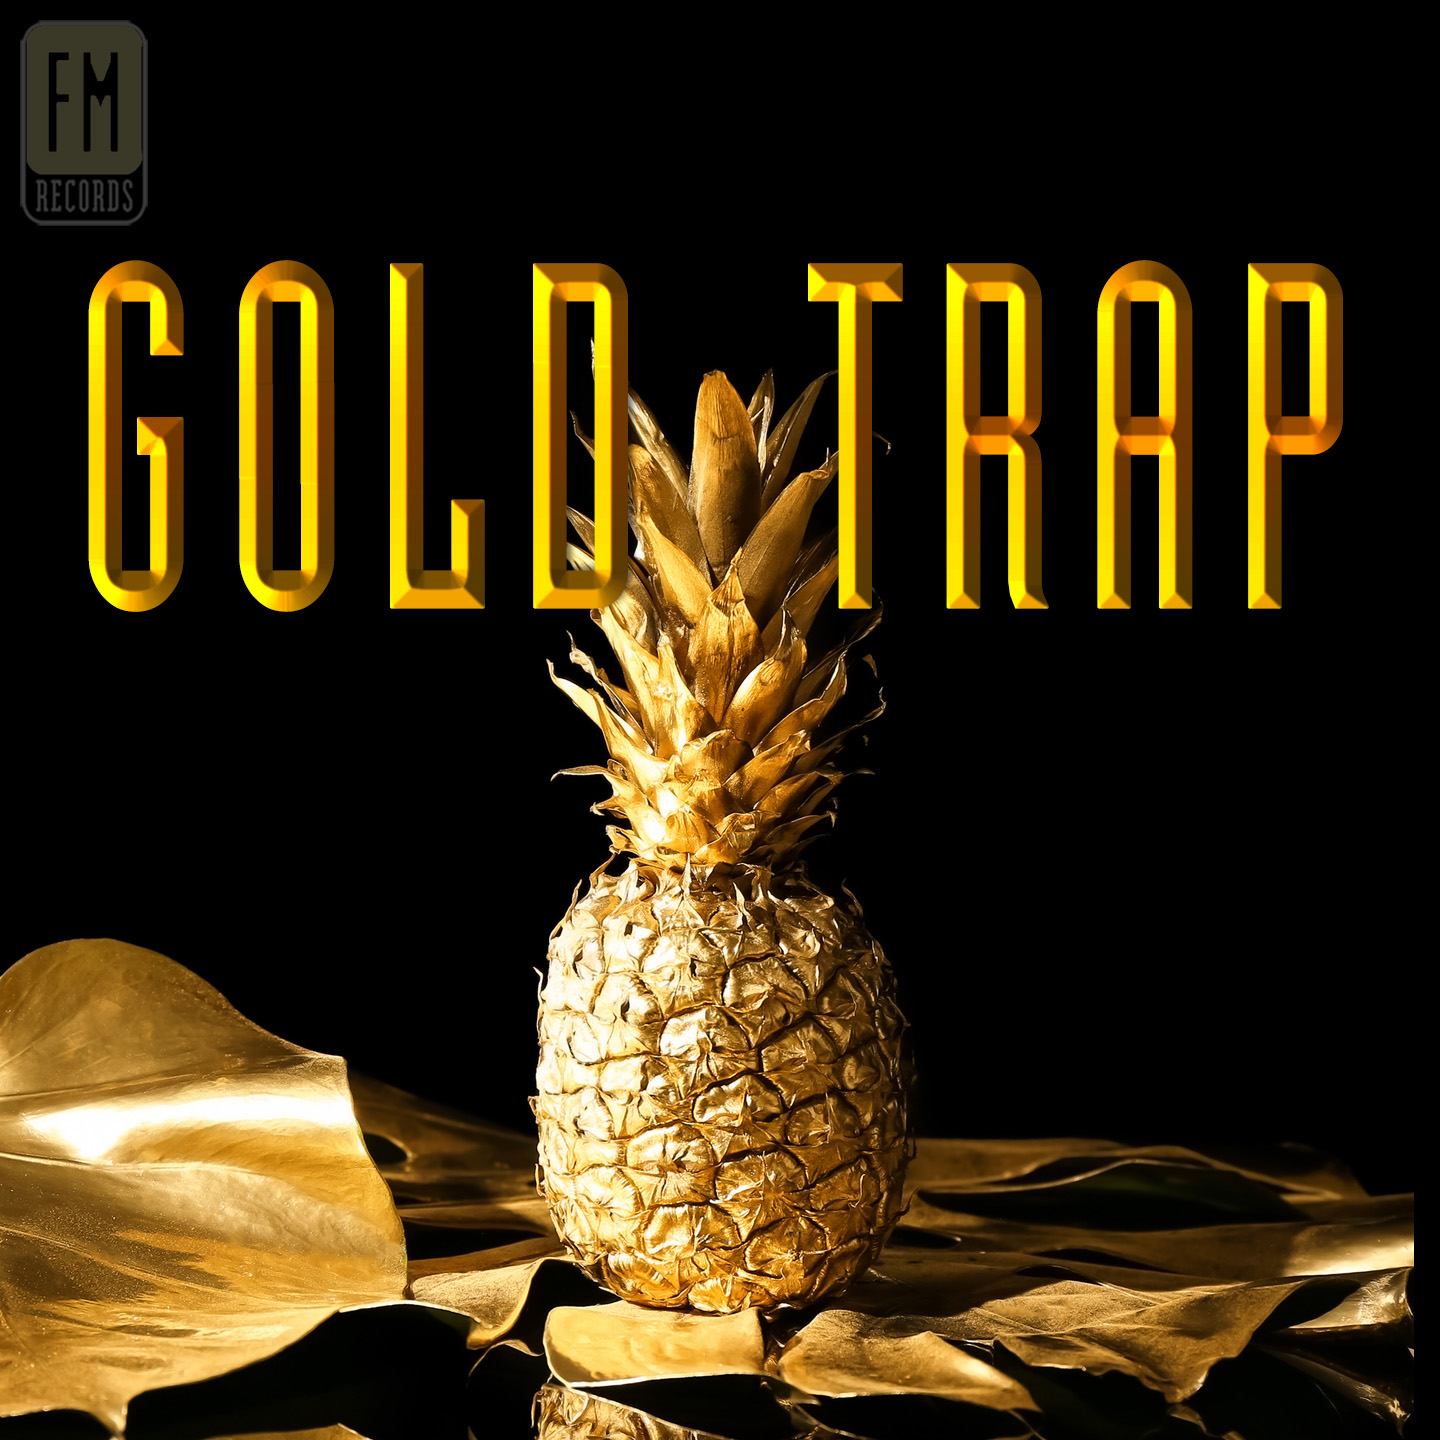 Gold Trap